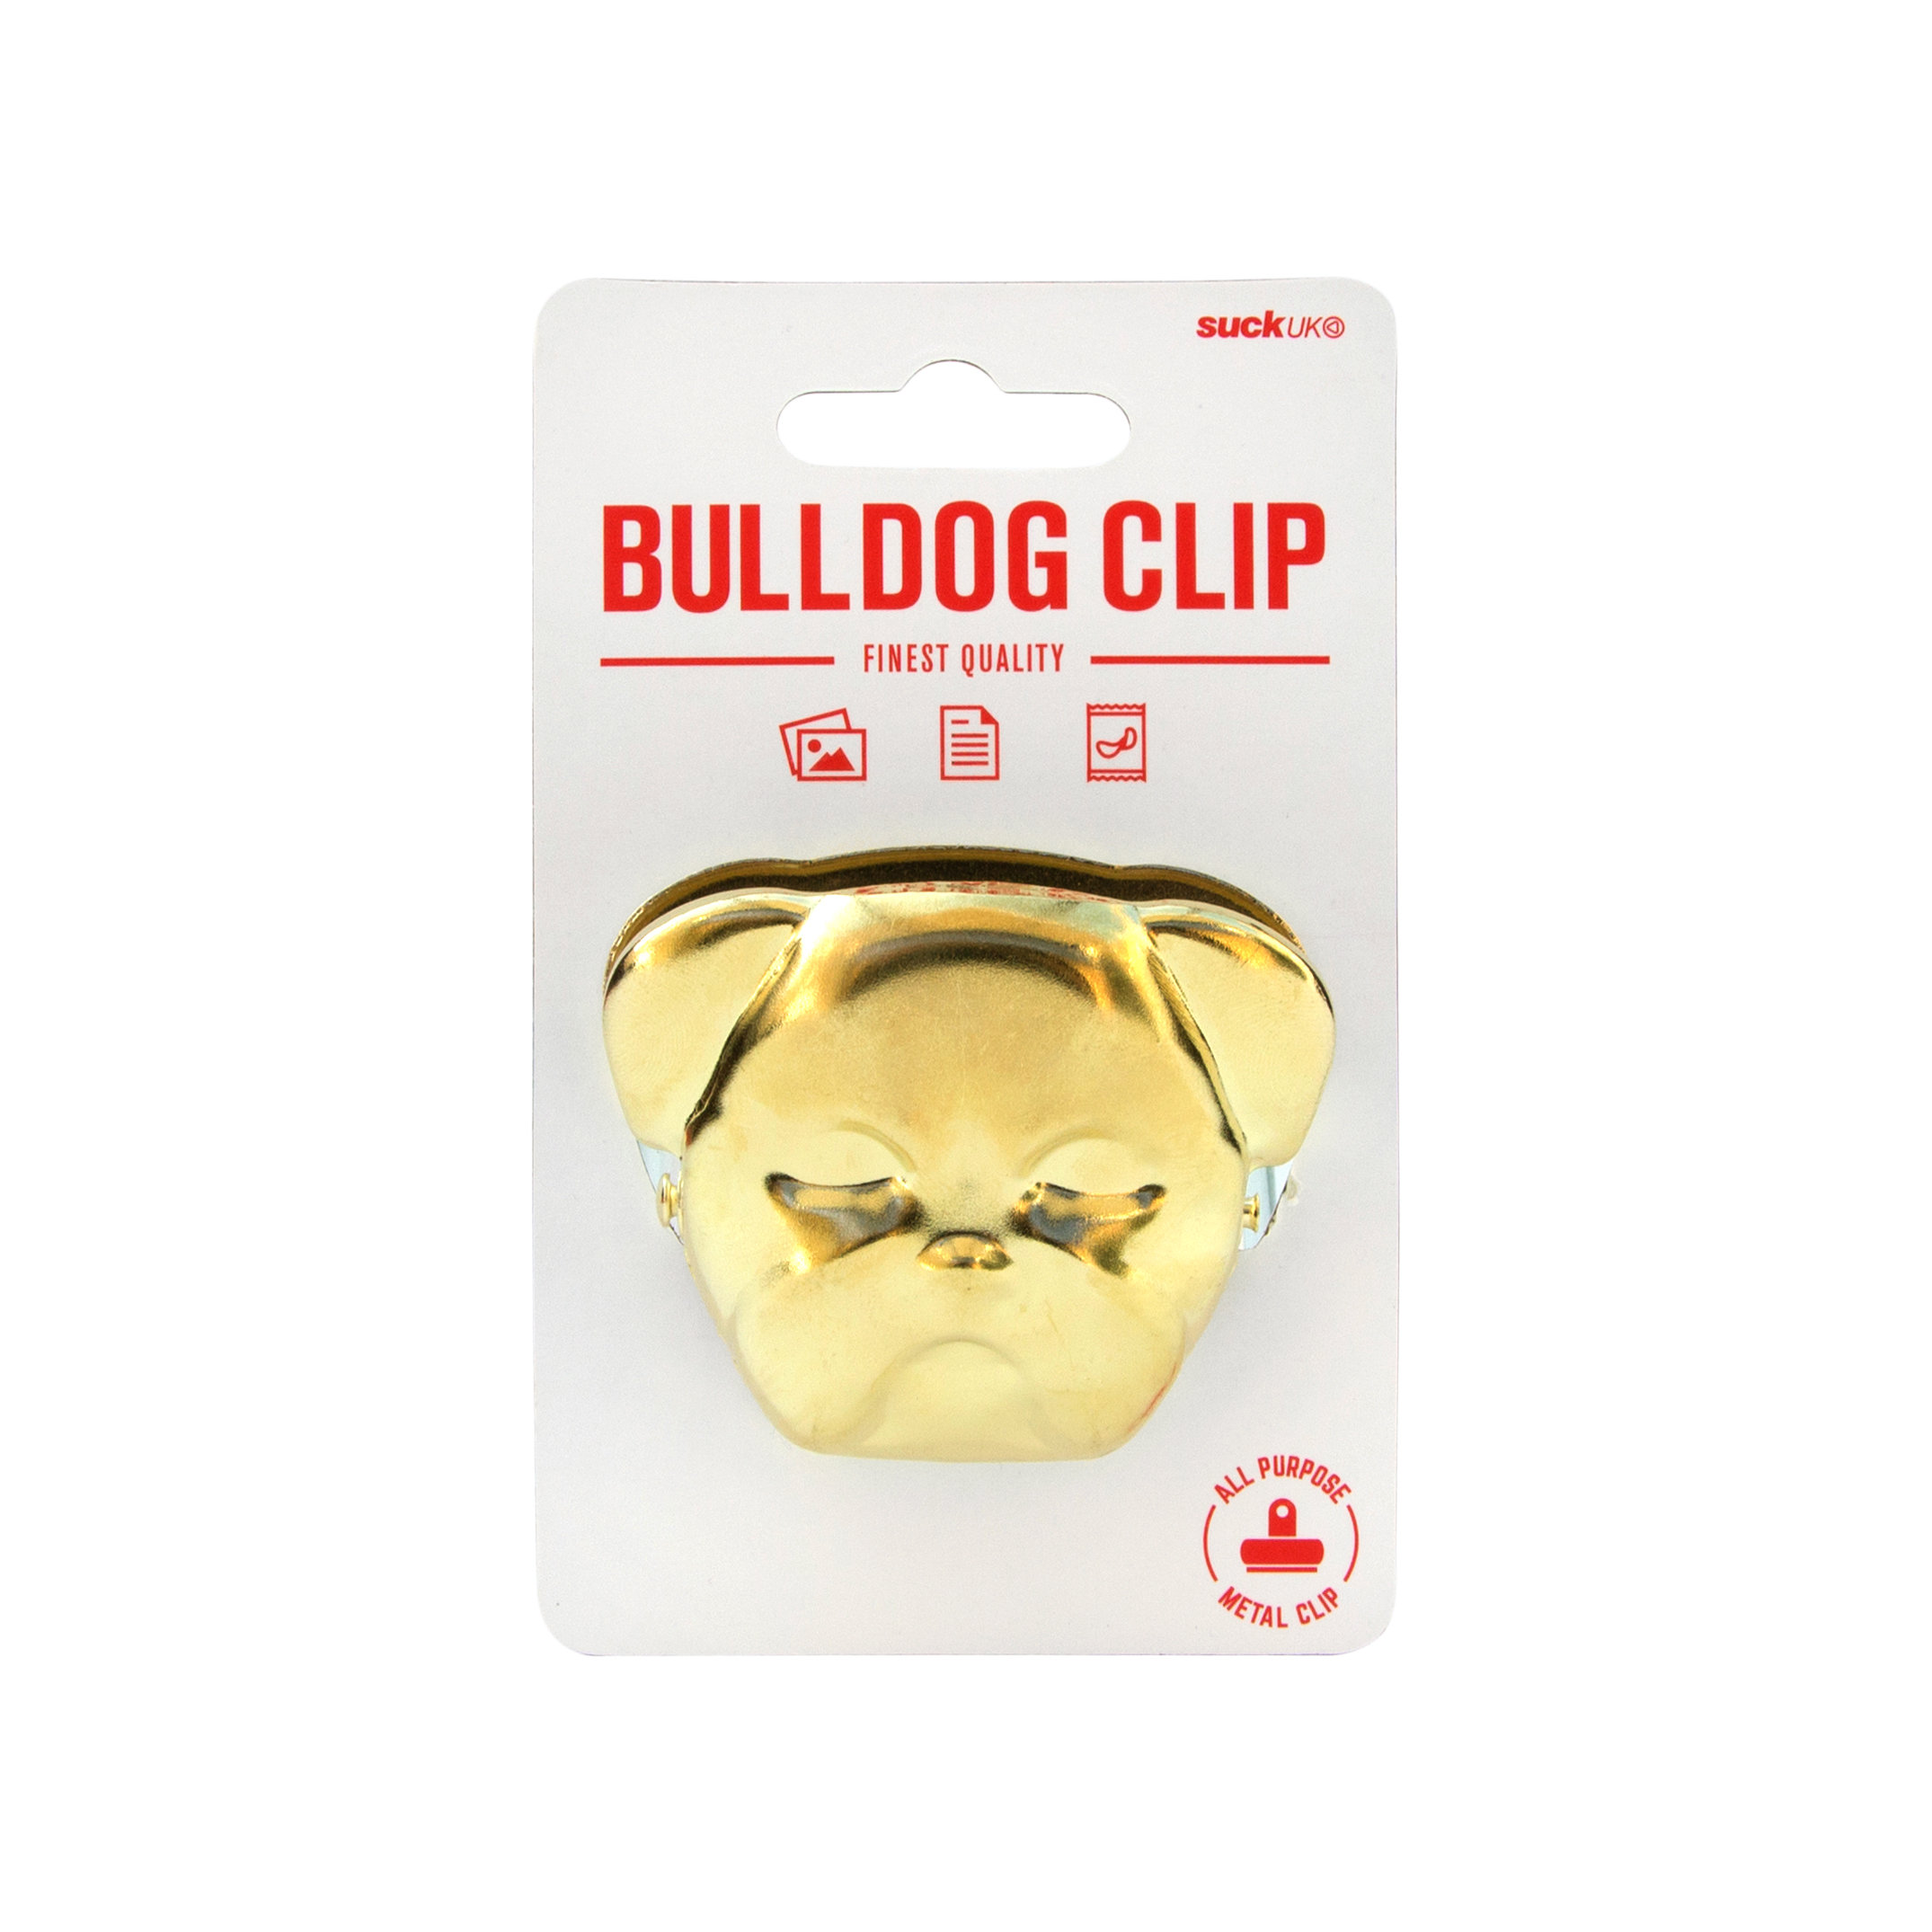 Brass bulldog clip for sealing food and organising paperwork